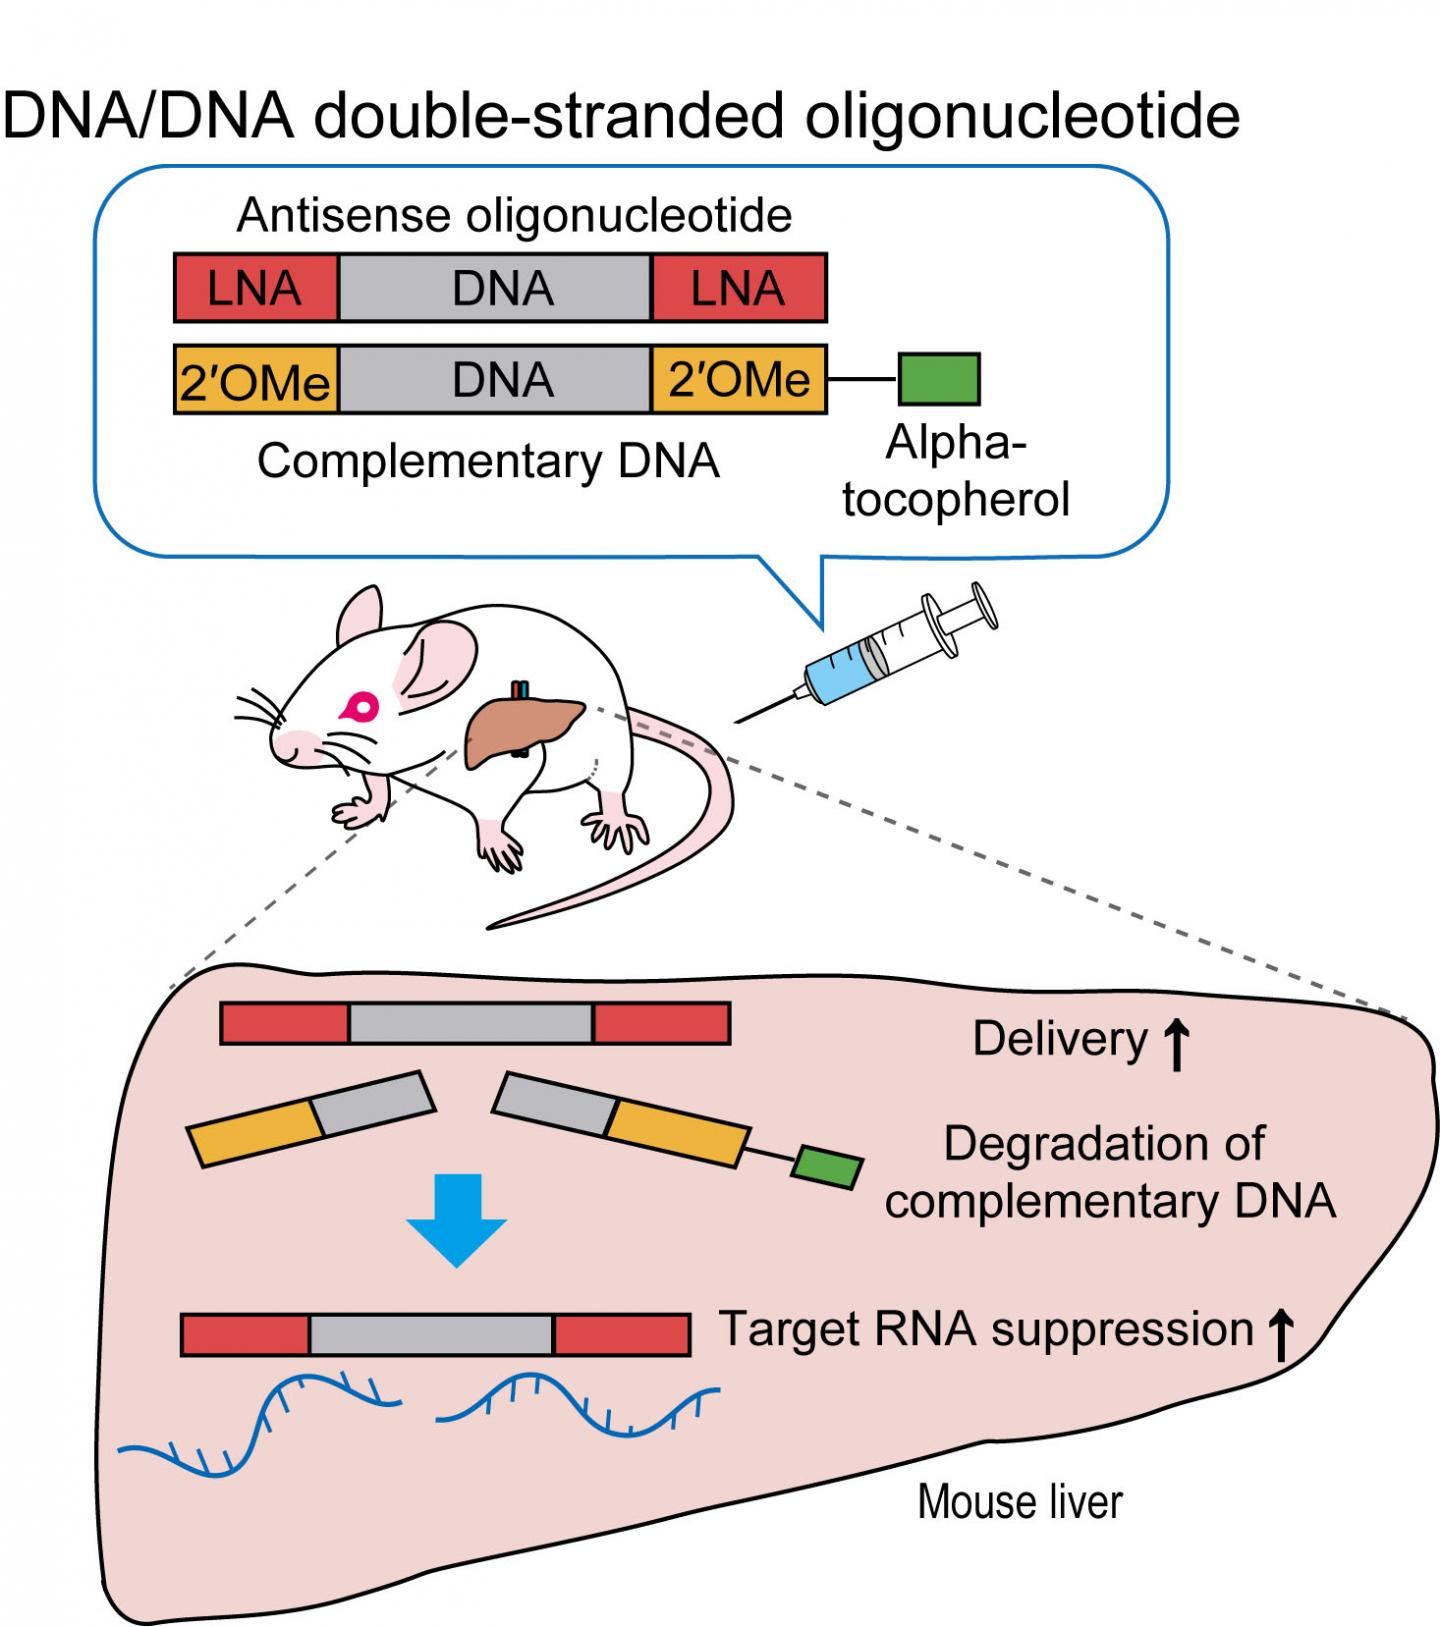 Dynamics of DNA/DNA Double-Stranded Oligonucleotide in Mouse Liver